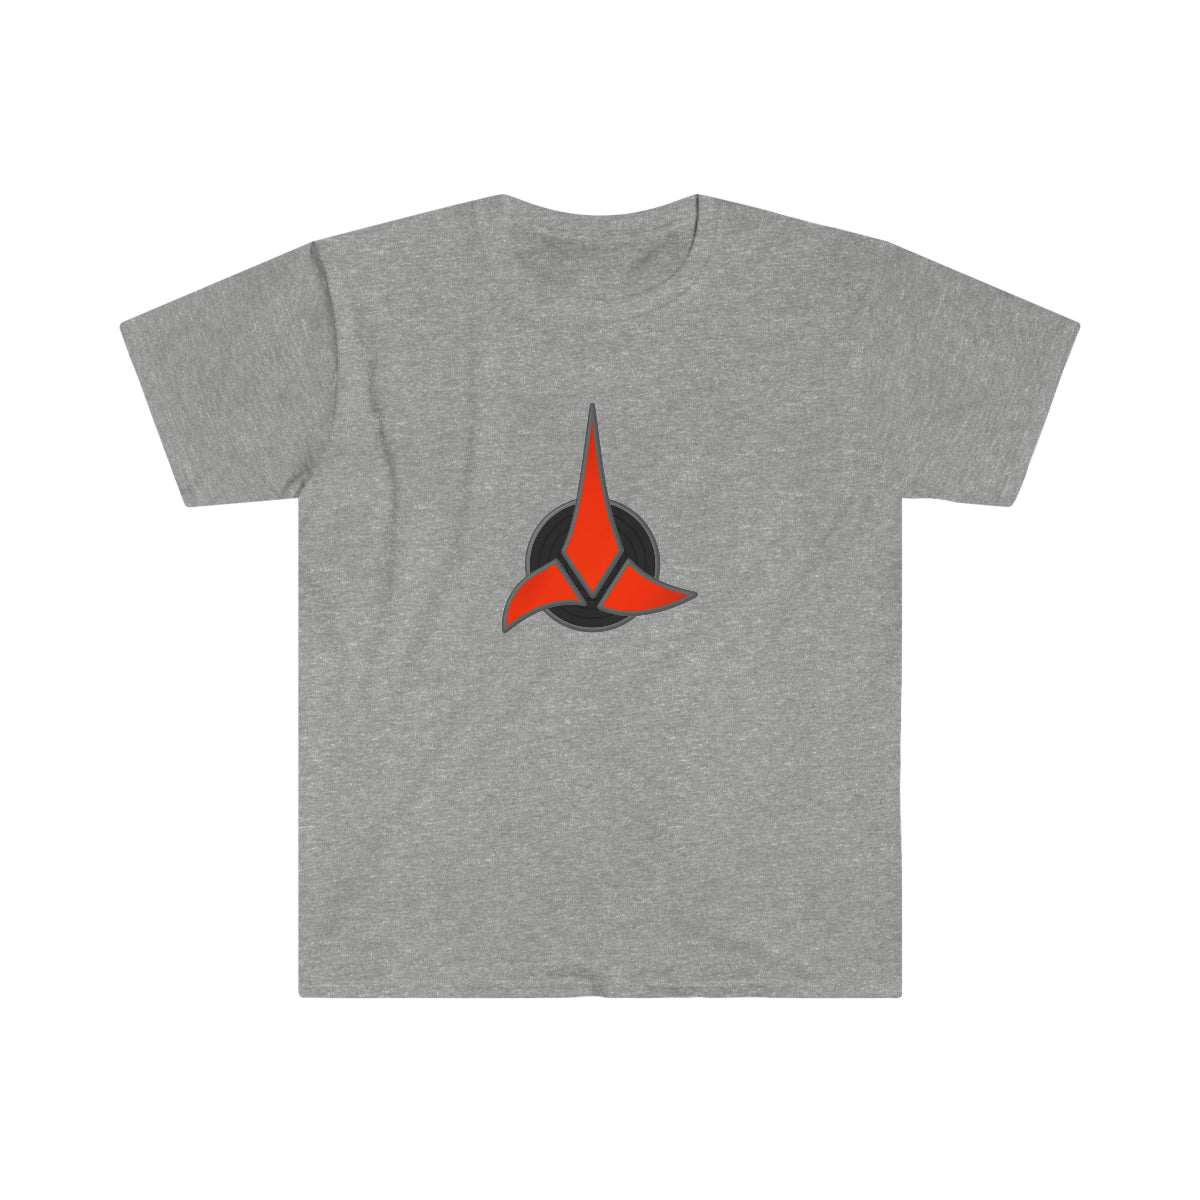 TNG Klingon Unisex Softstyle T-Shirt